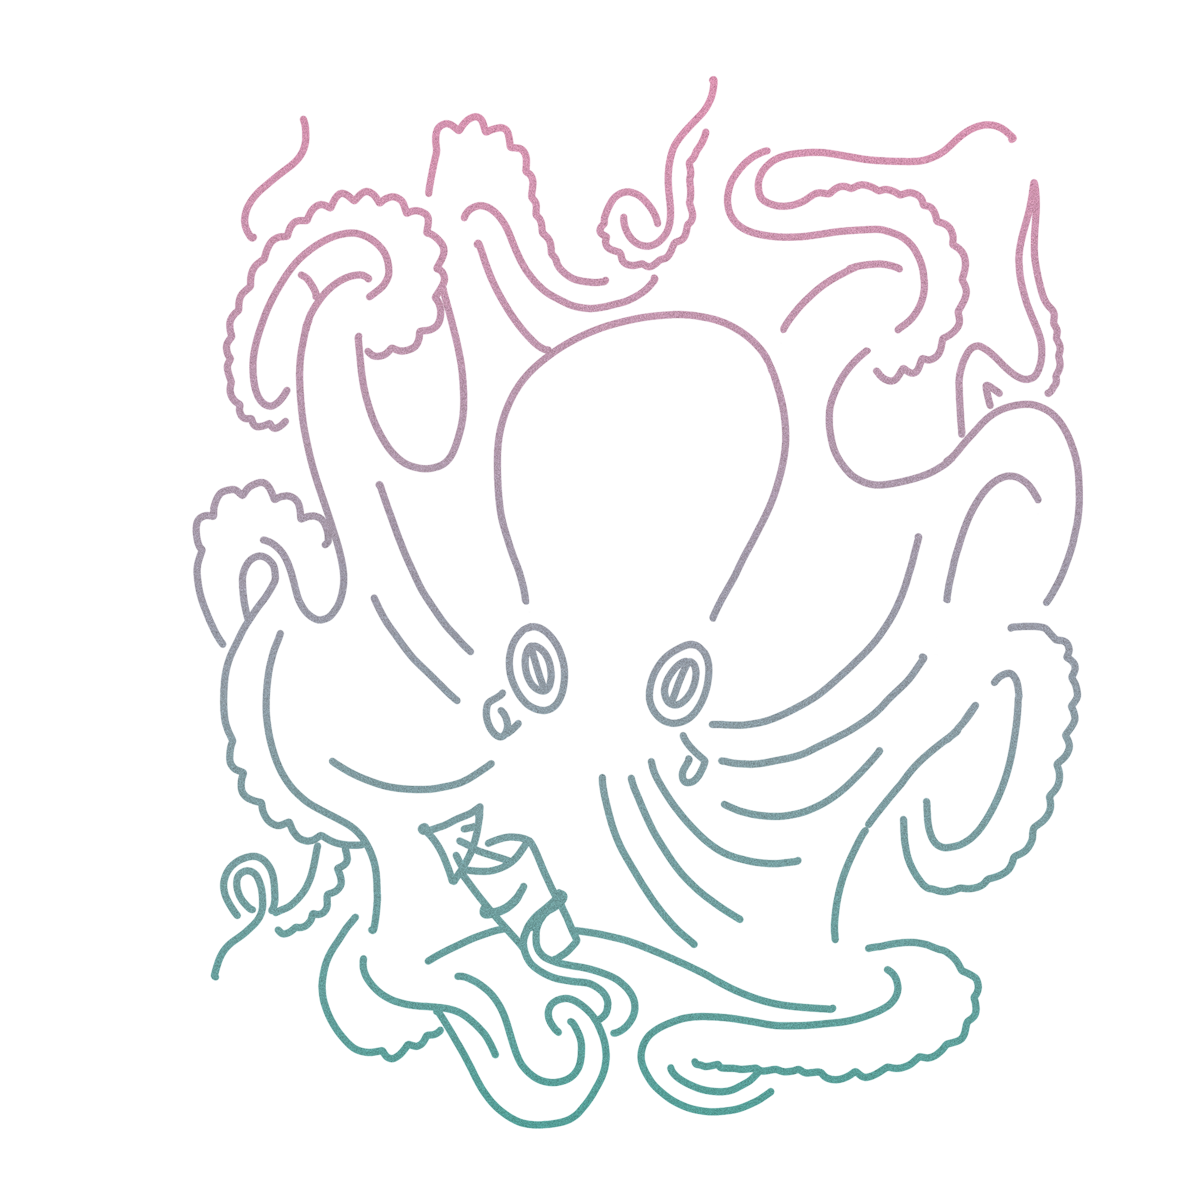 Line illustration of the mythical creature kraken